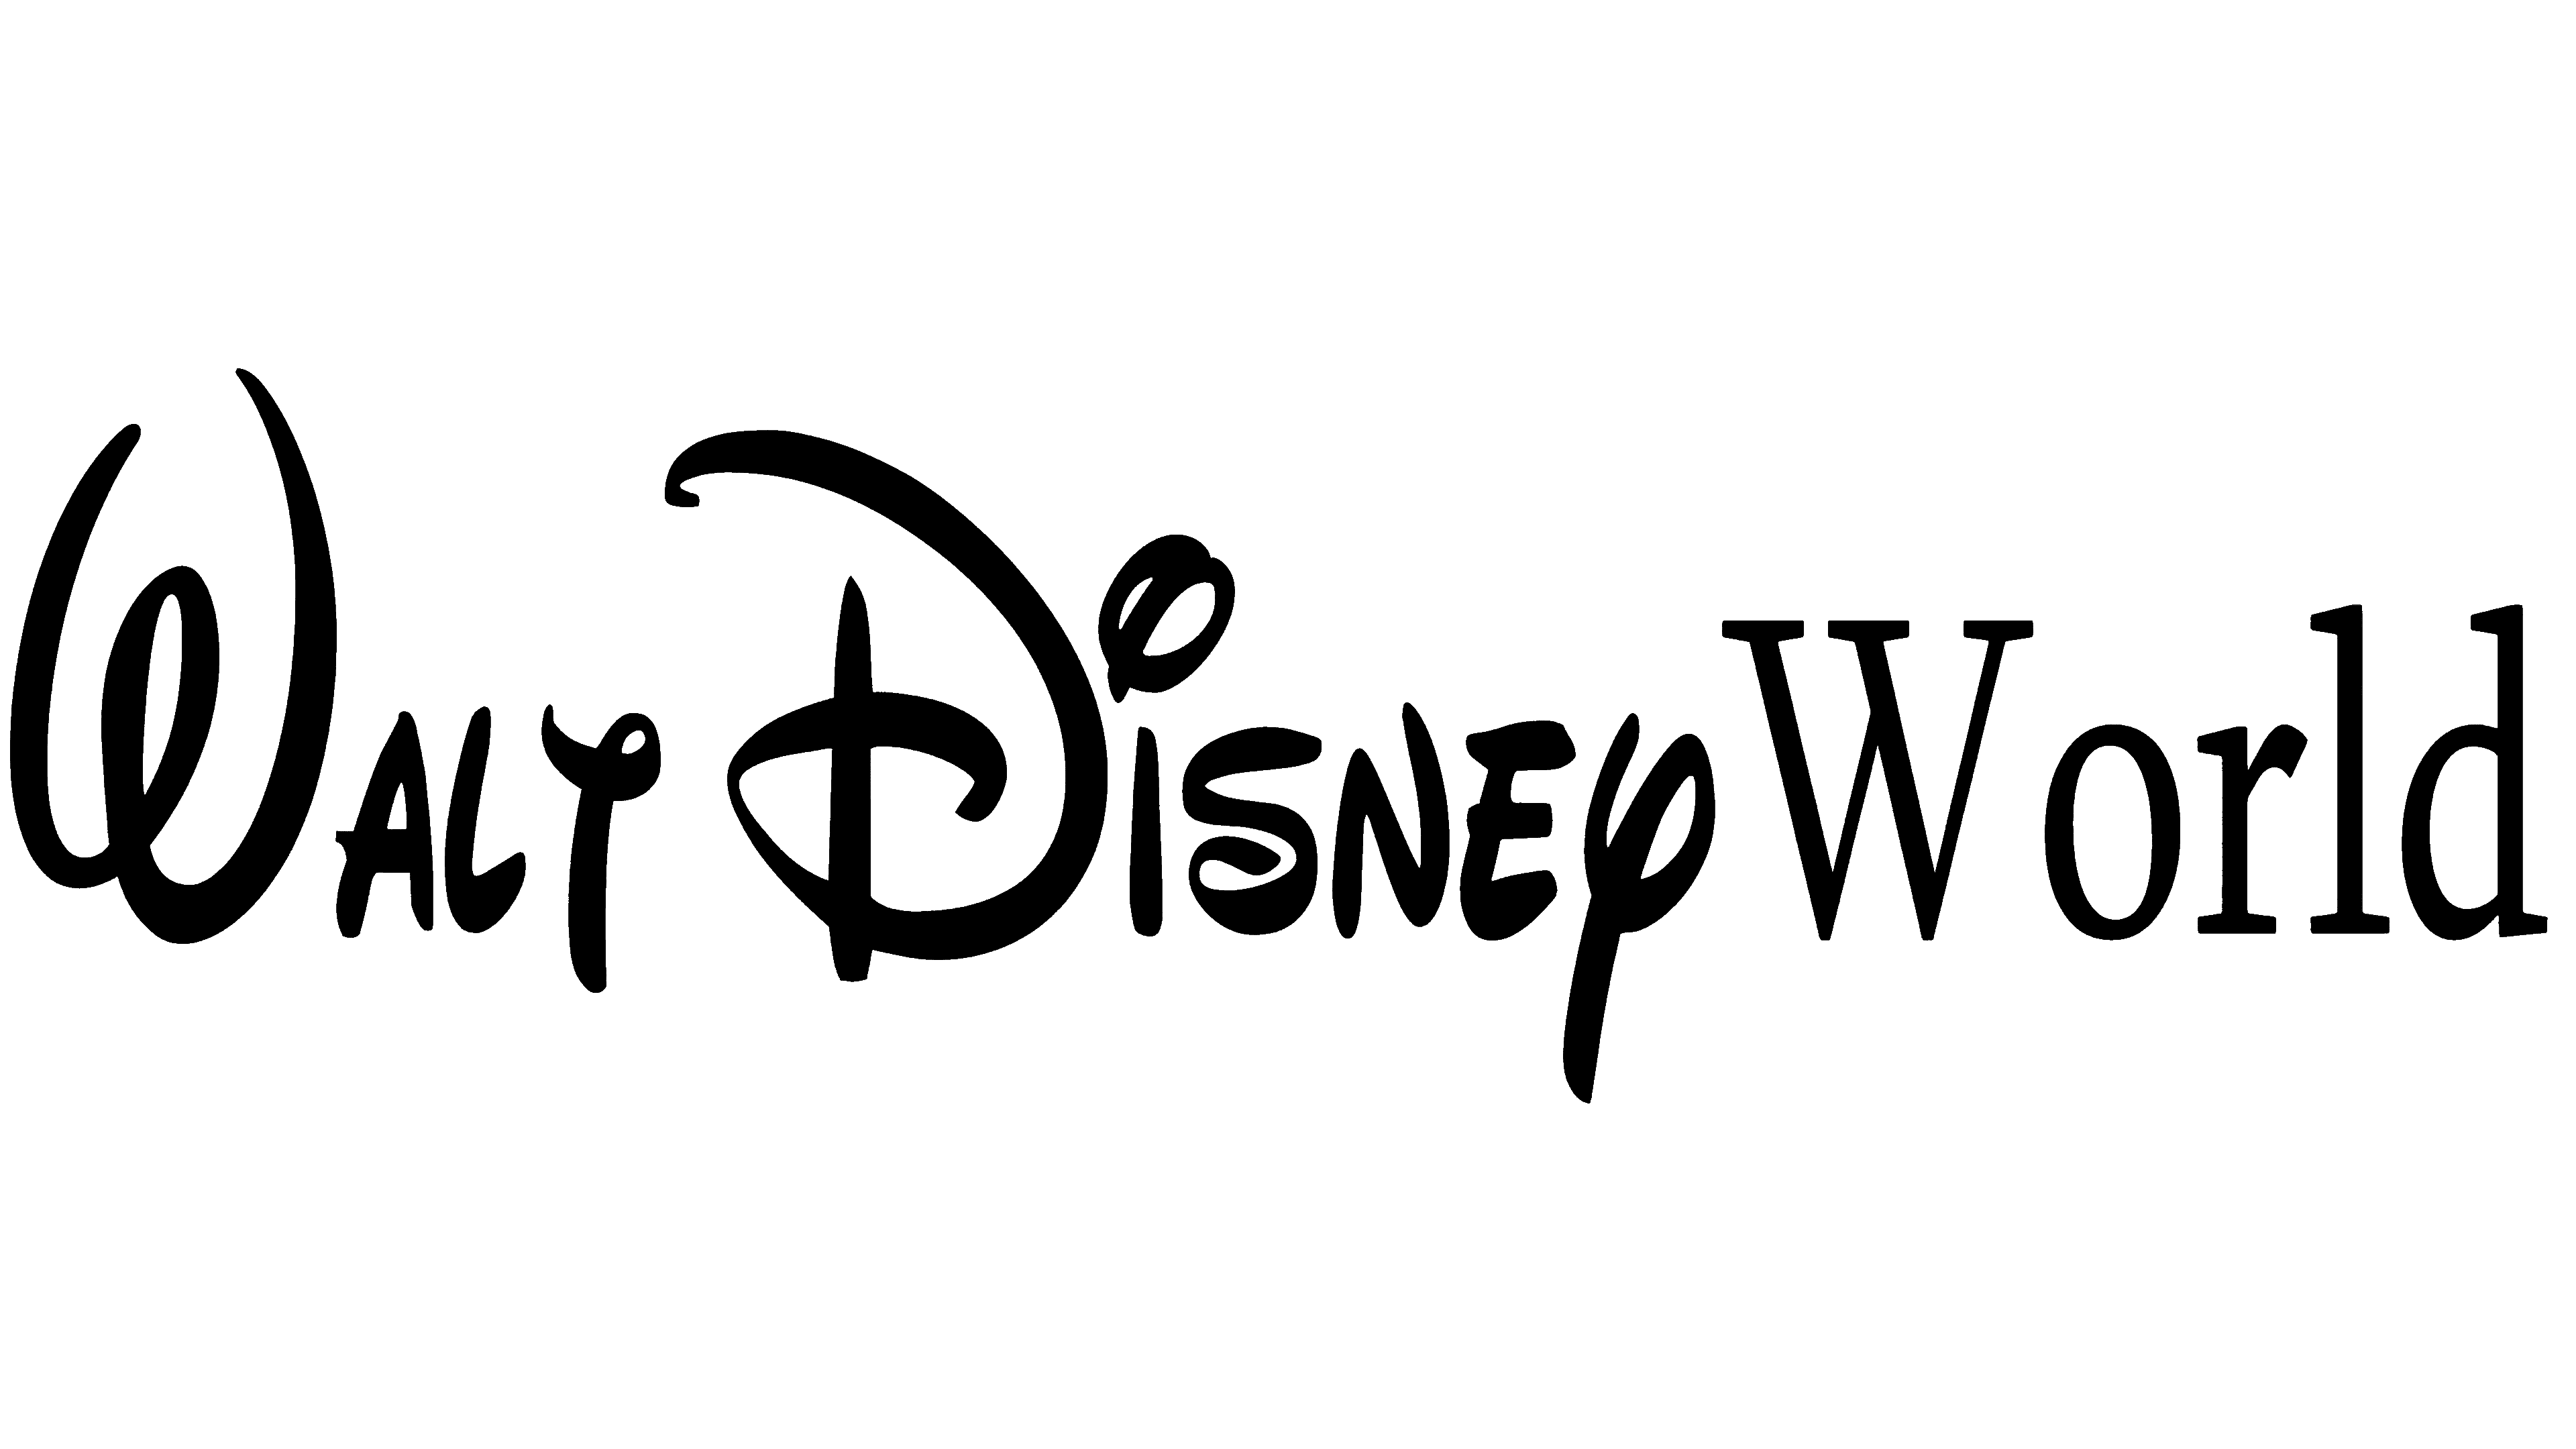 Disney World Logo, PNG, Symbol, History, Meaning